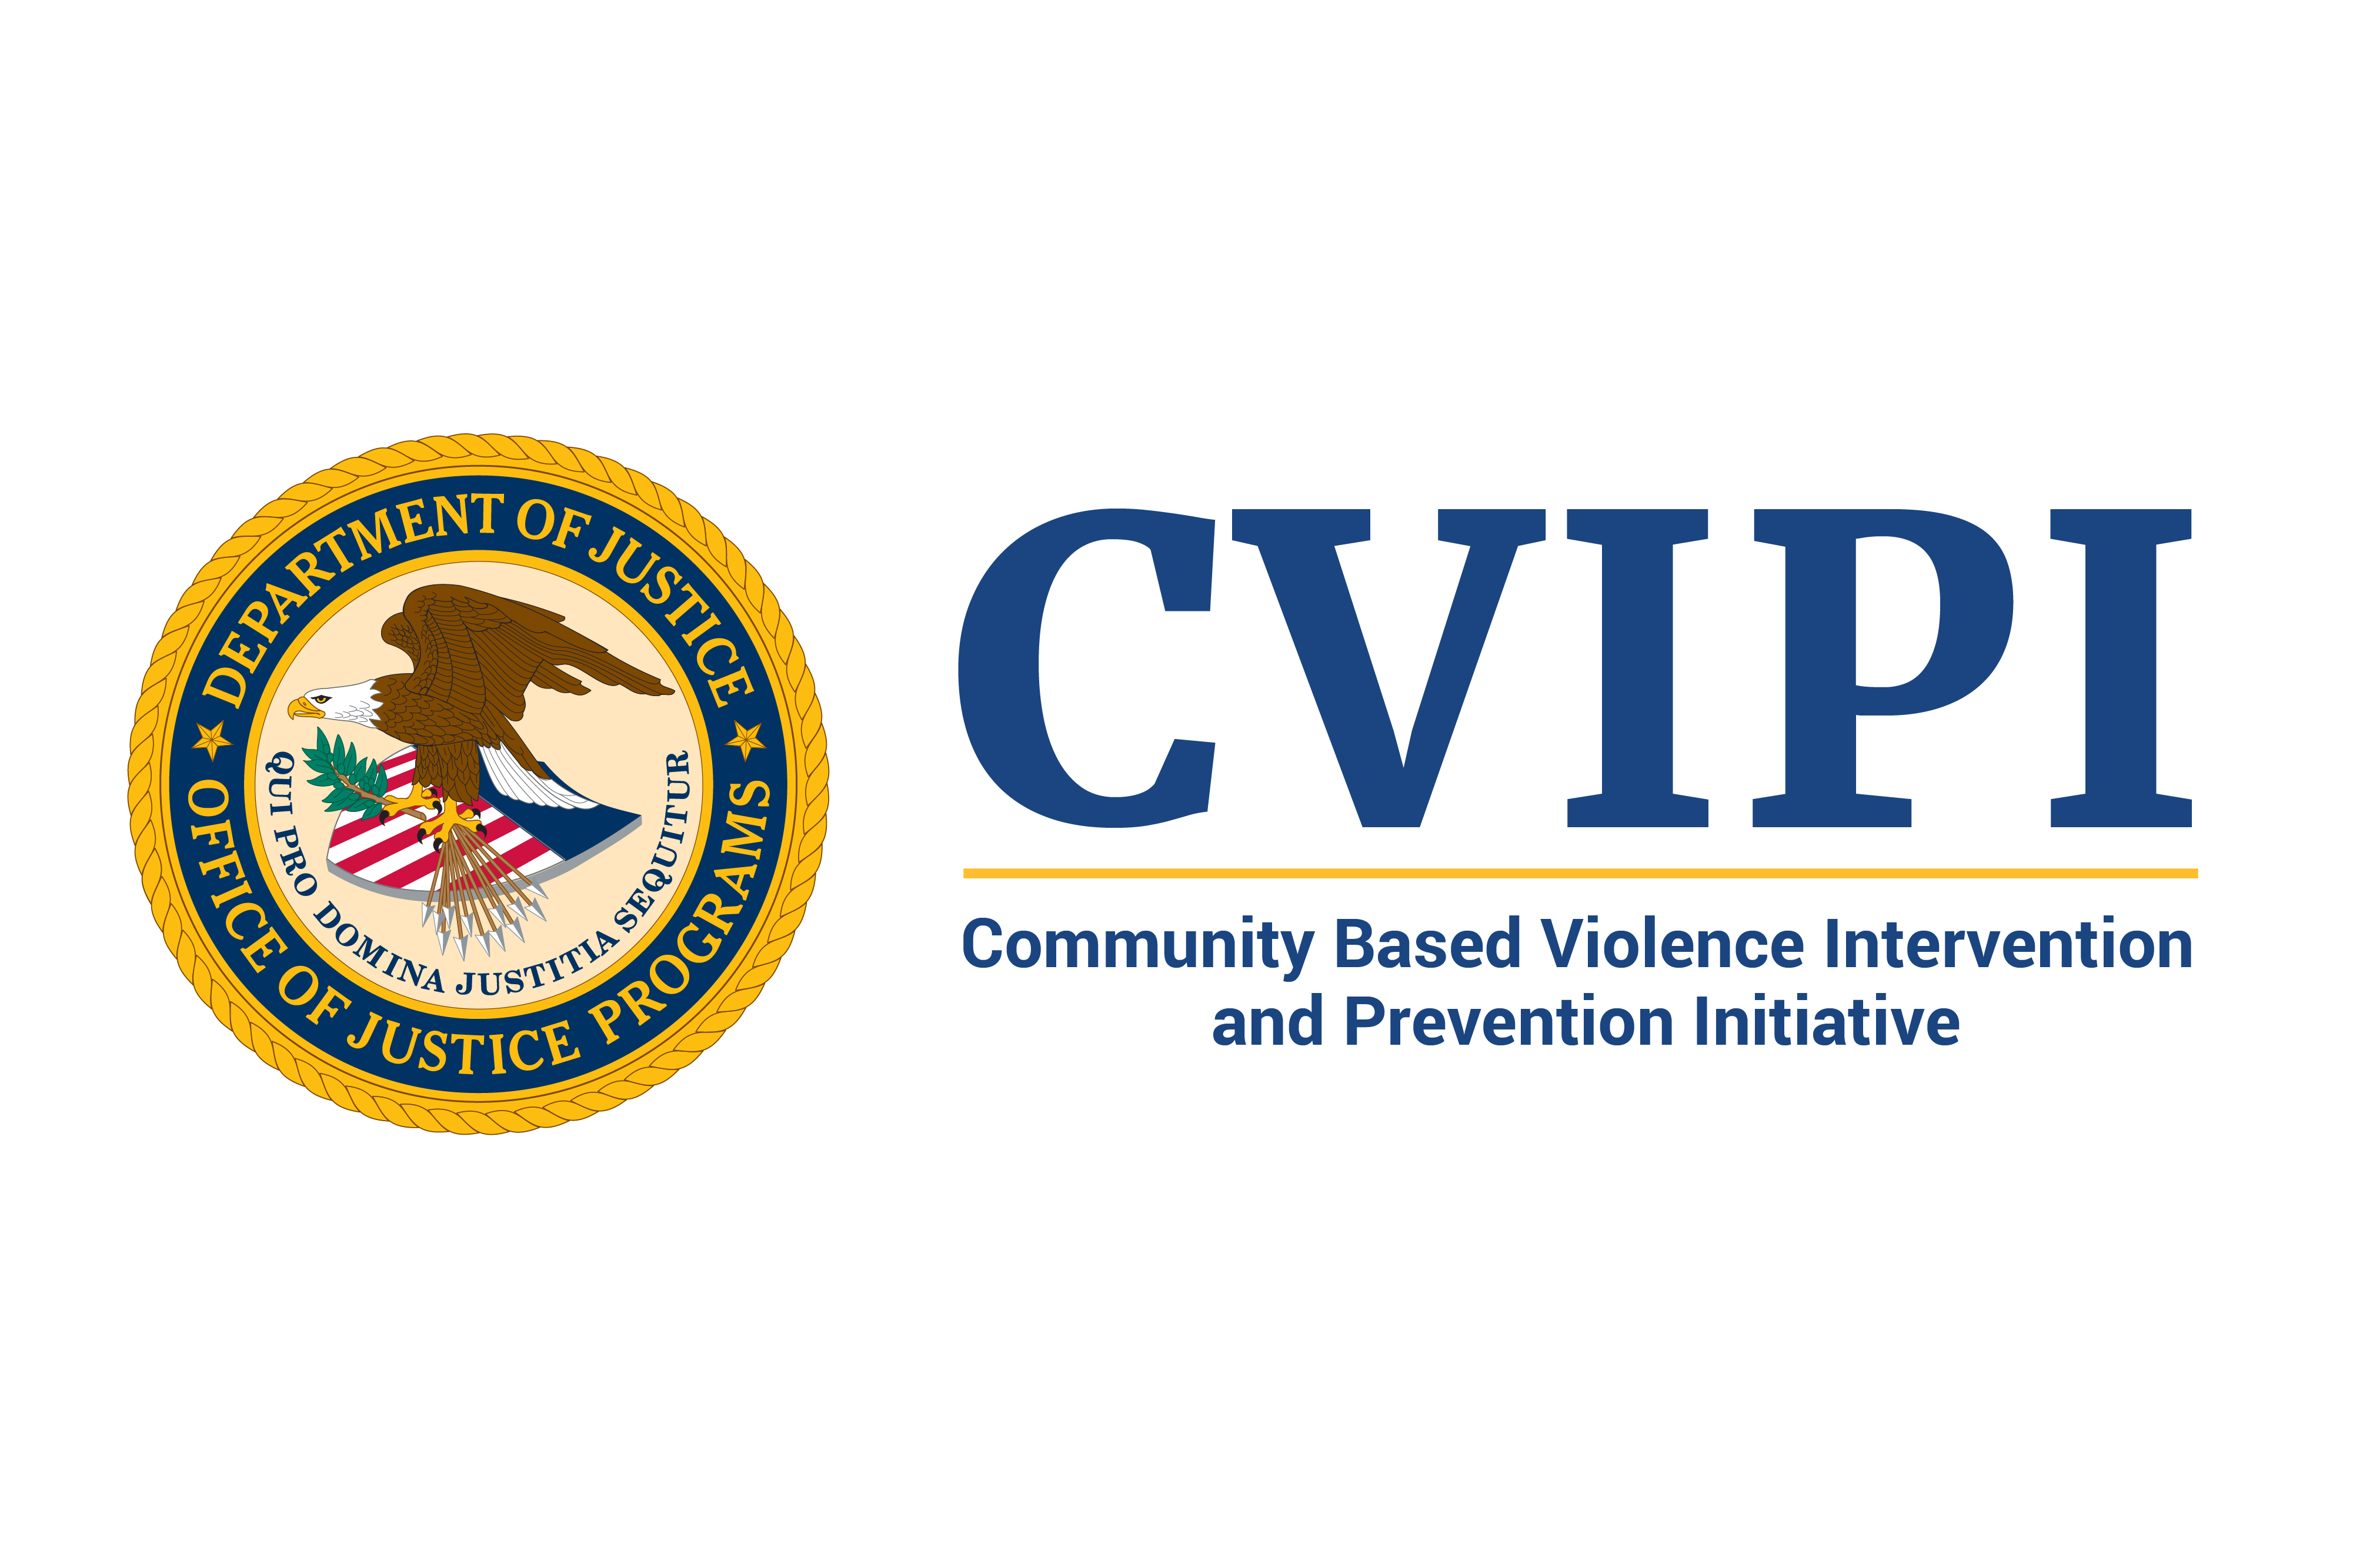 Community Based Violence Intervention and Prevention Initiative (CVIPI) logo